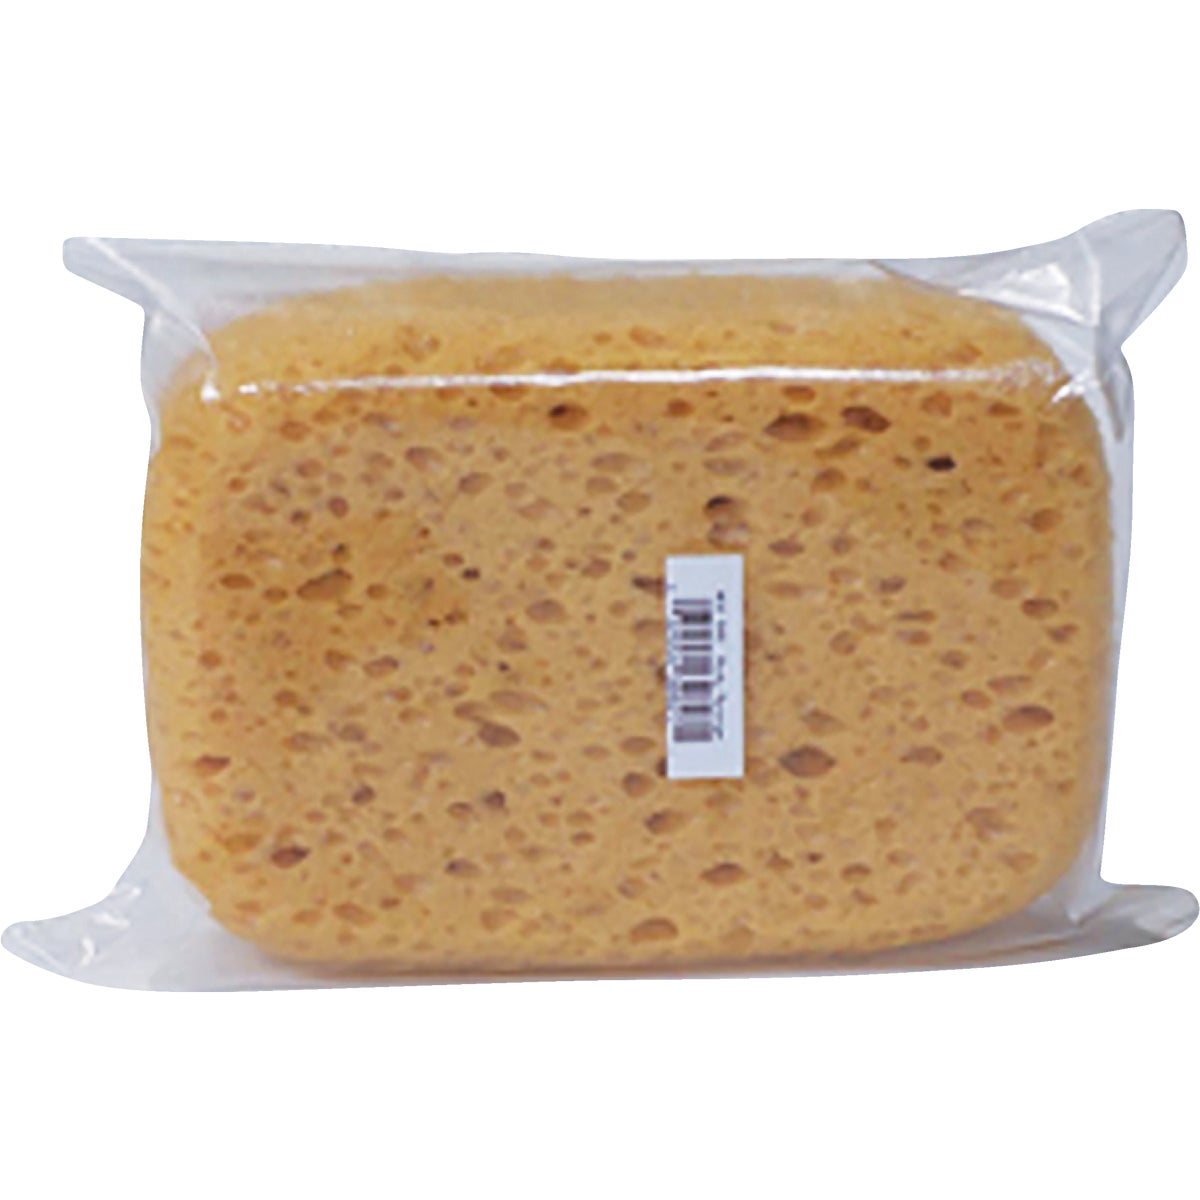 Item 723718, Open pore sponge comparable to a natural sponge.